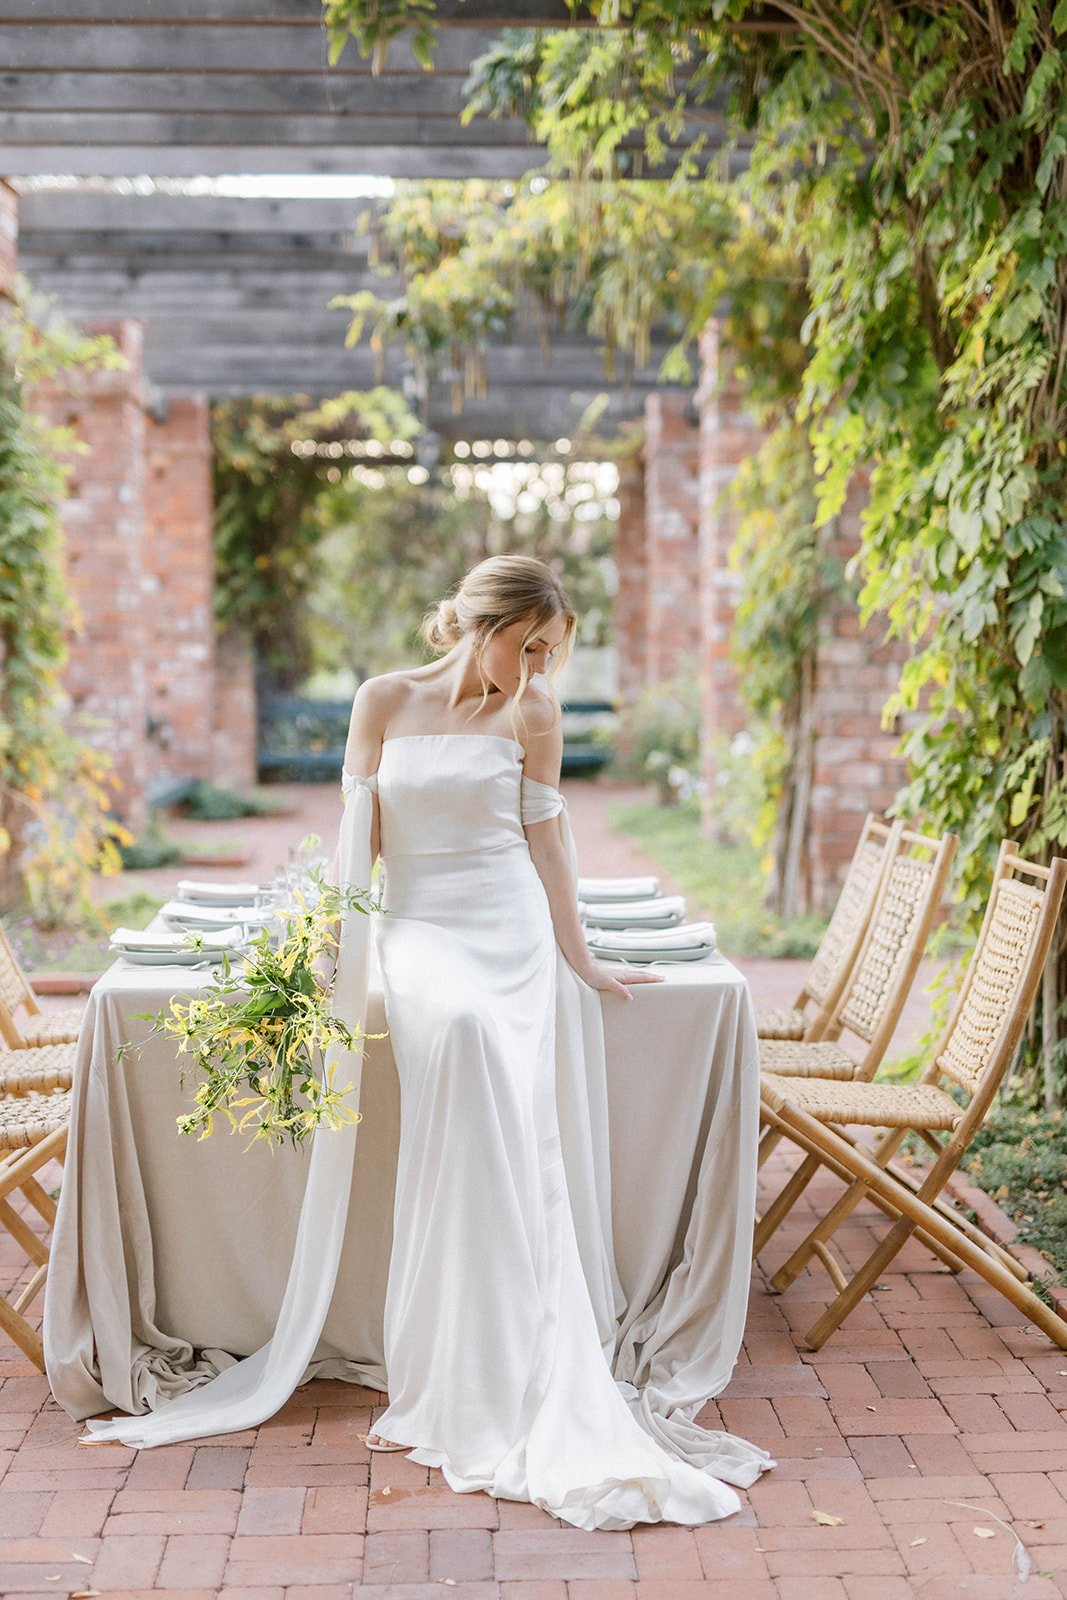  california garden sophisticated minimal wedding dress 